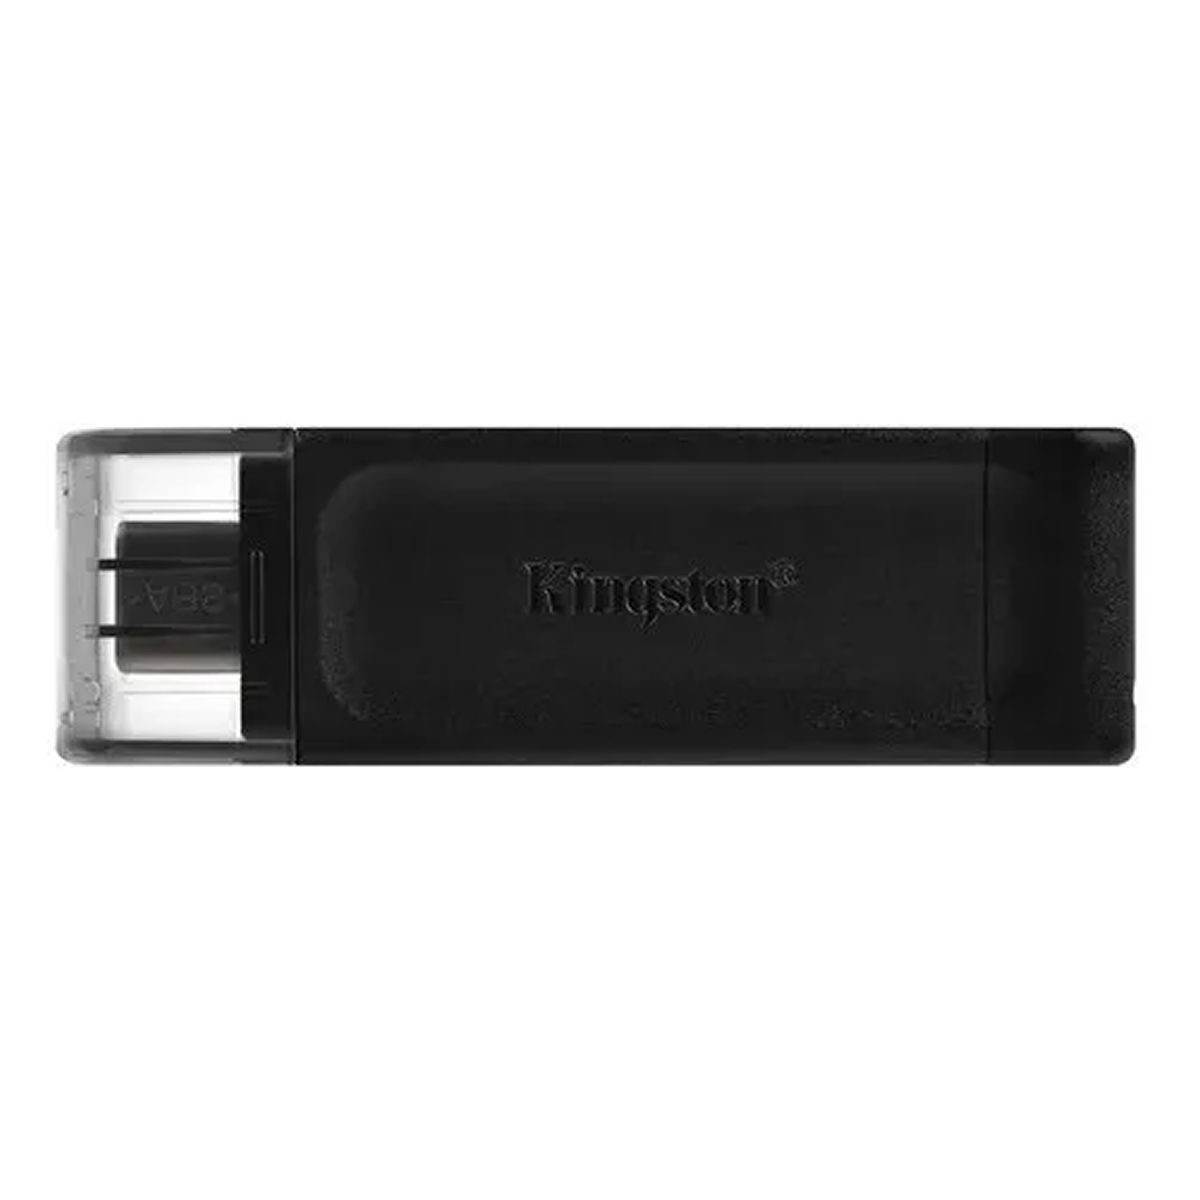 PENDRIVE KINGSTON 64GB DT70 USB-C GEN 1 NEGRO 3.2